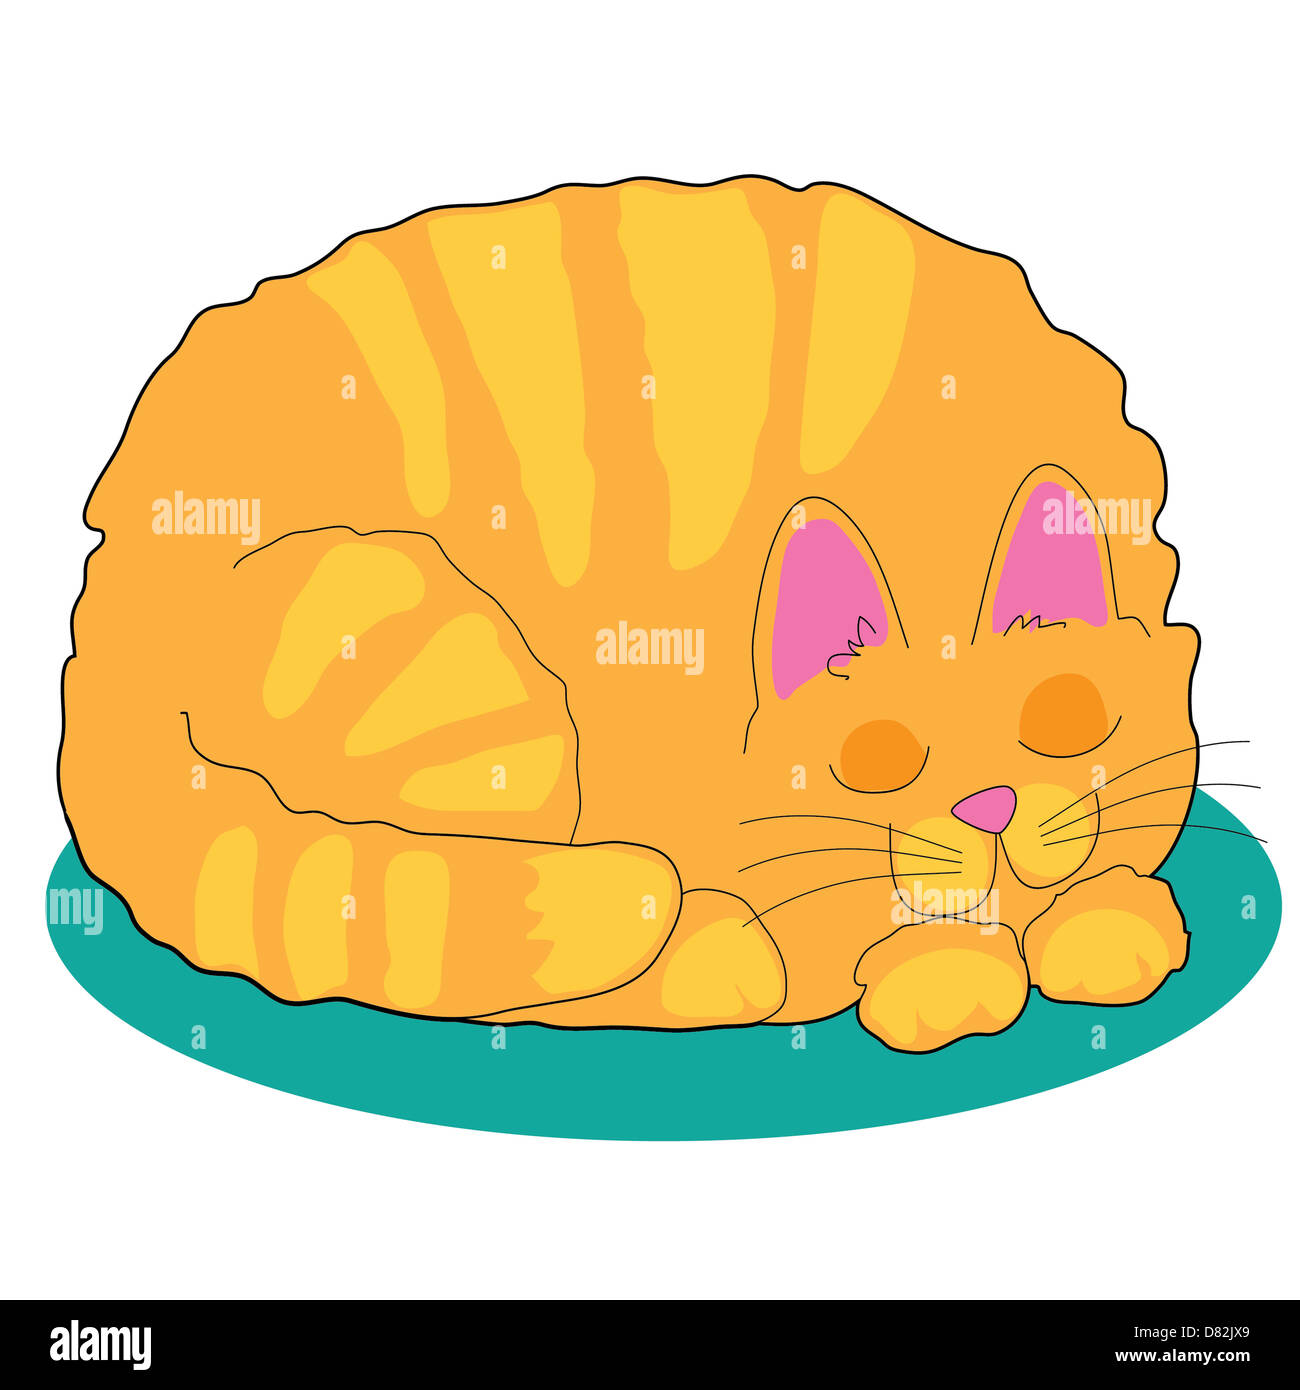 A big fat marmalade cat is asleep on a teal rug Stock Photo